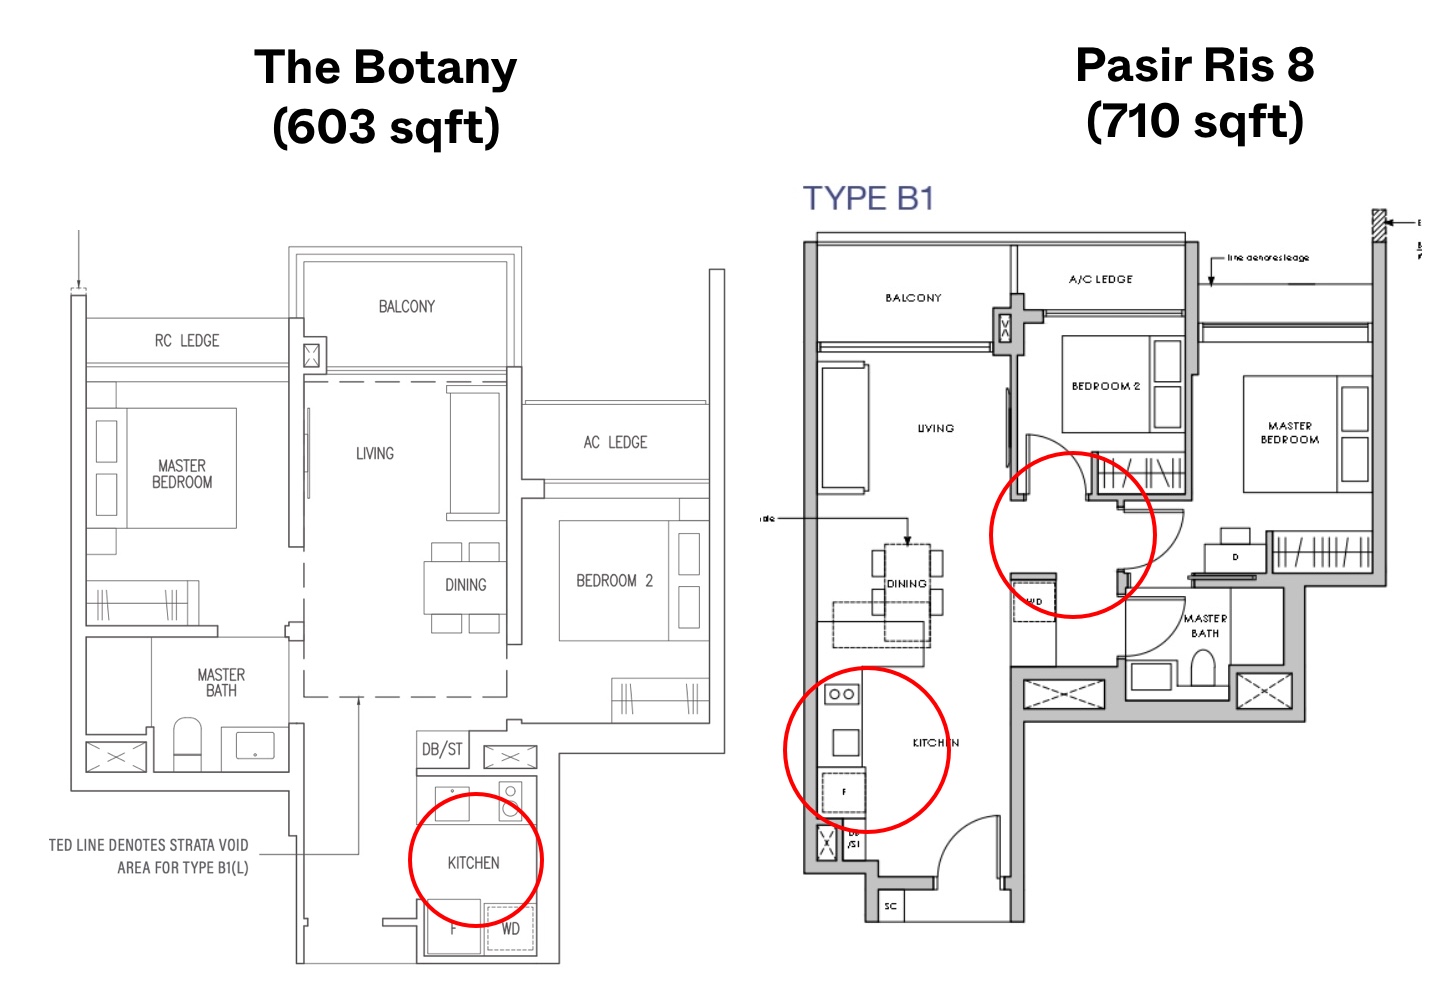 The Botany vs Pasir Ris 8 floor plan